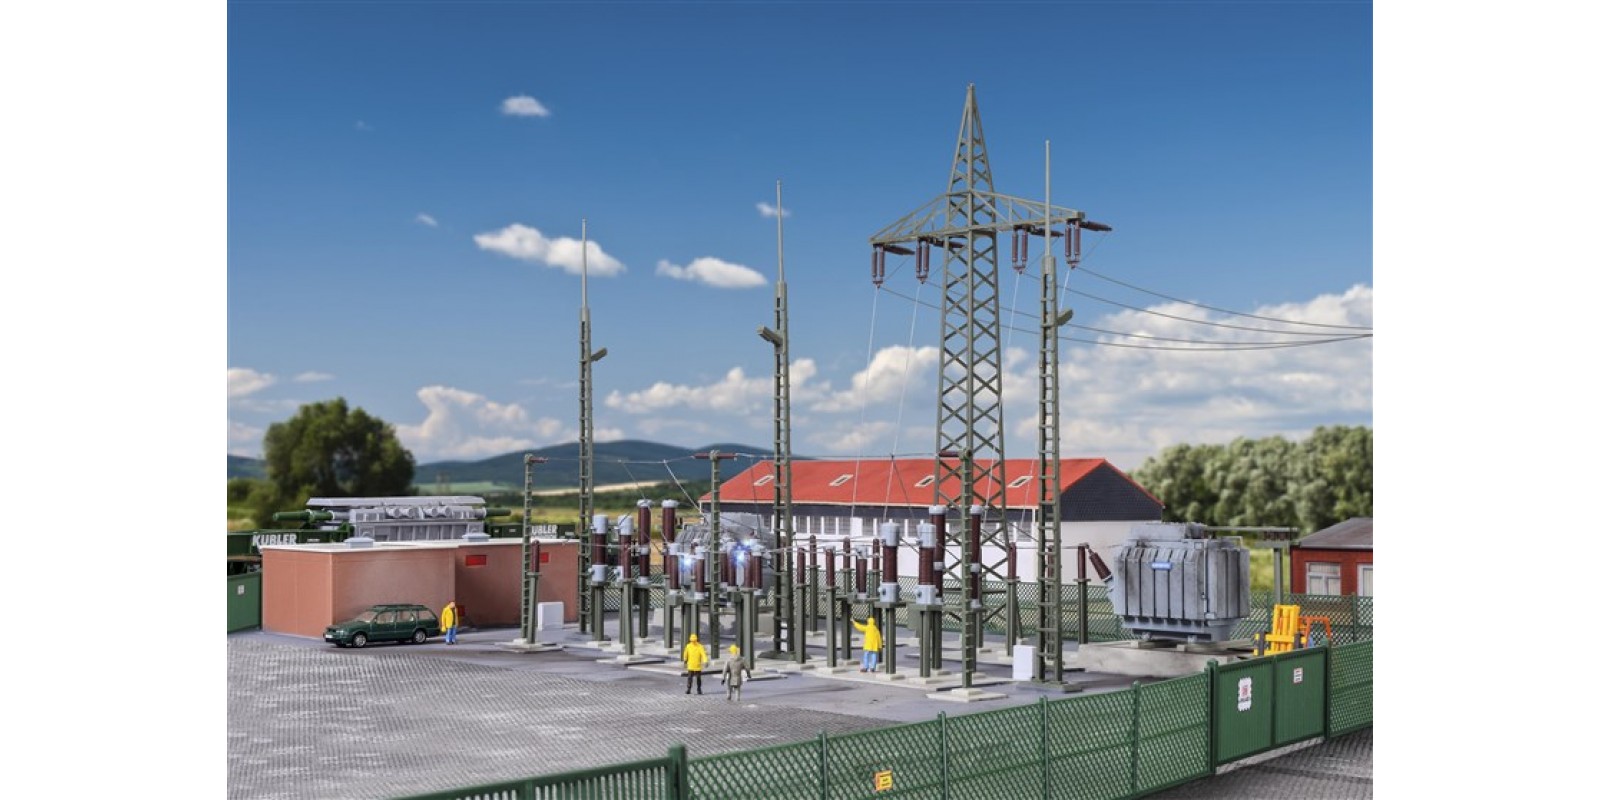 KI39840 H0 Electrical substation Baden-Baden with electric lightning